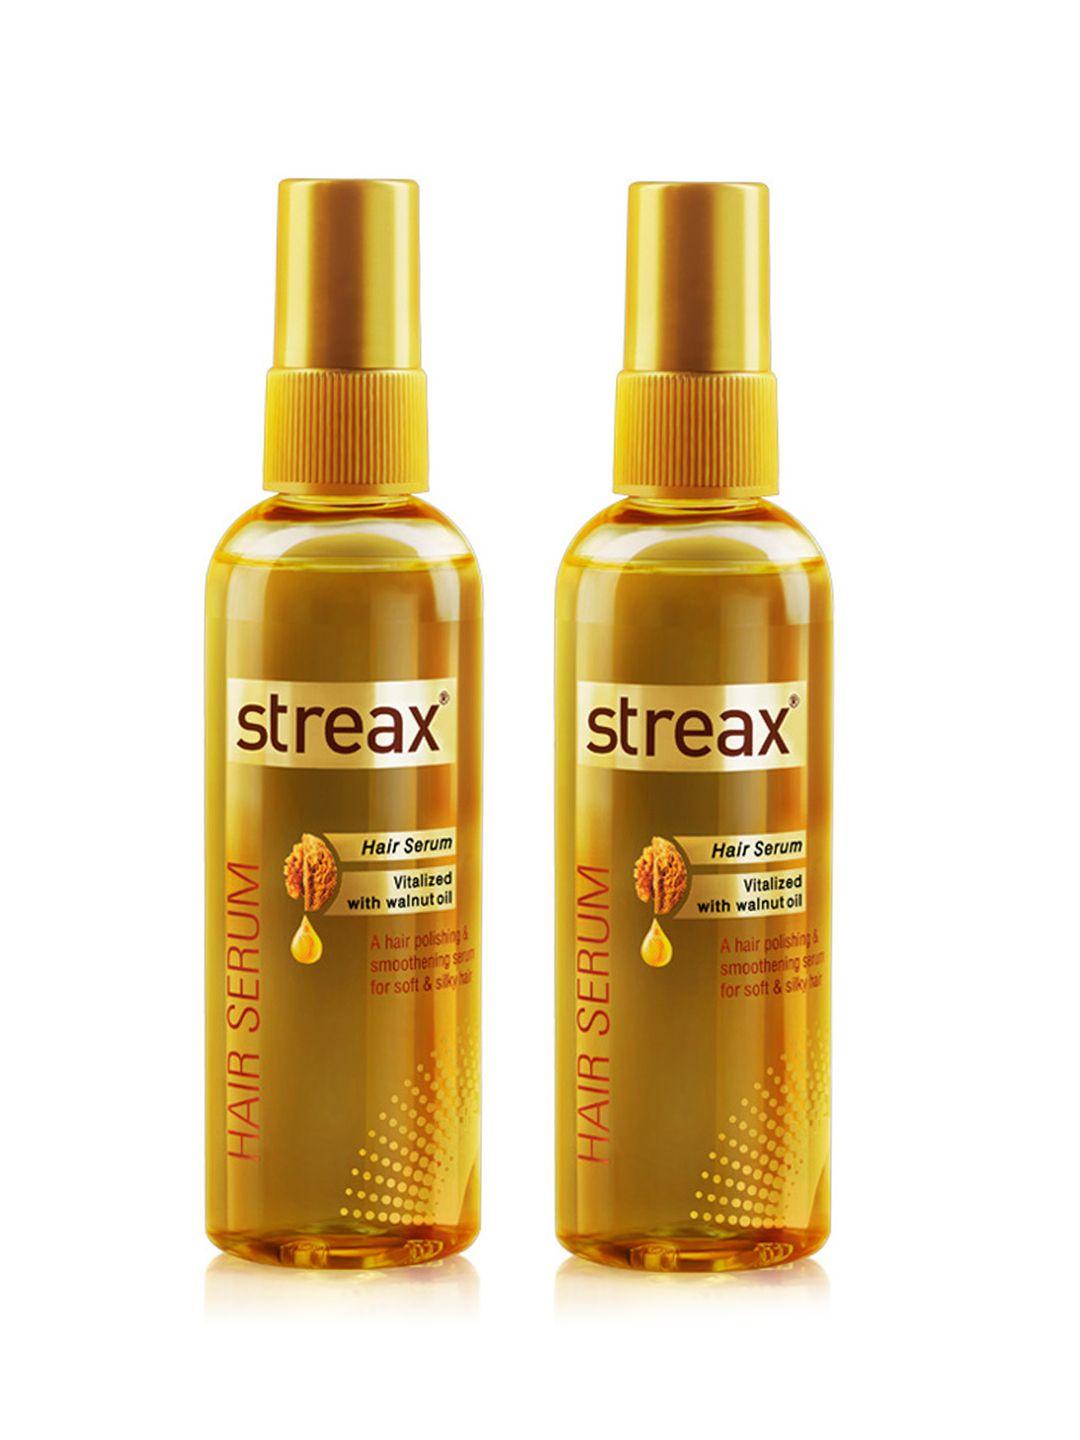 streax set of 2 vitalised hair serum with walnut oil & vitamin e - 45ml each